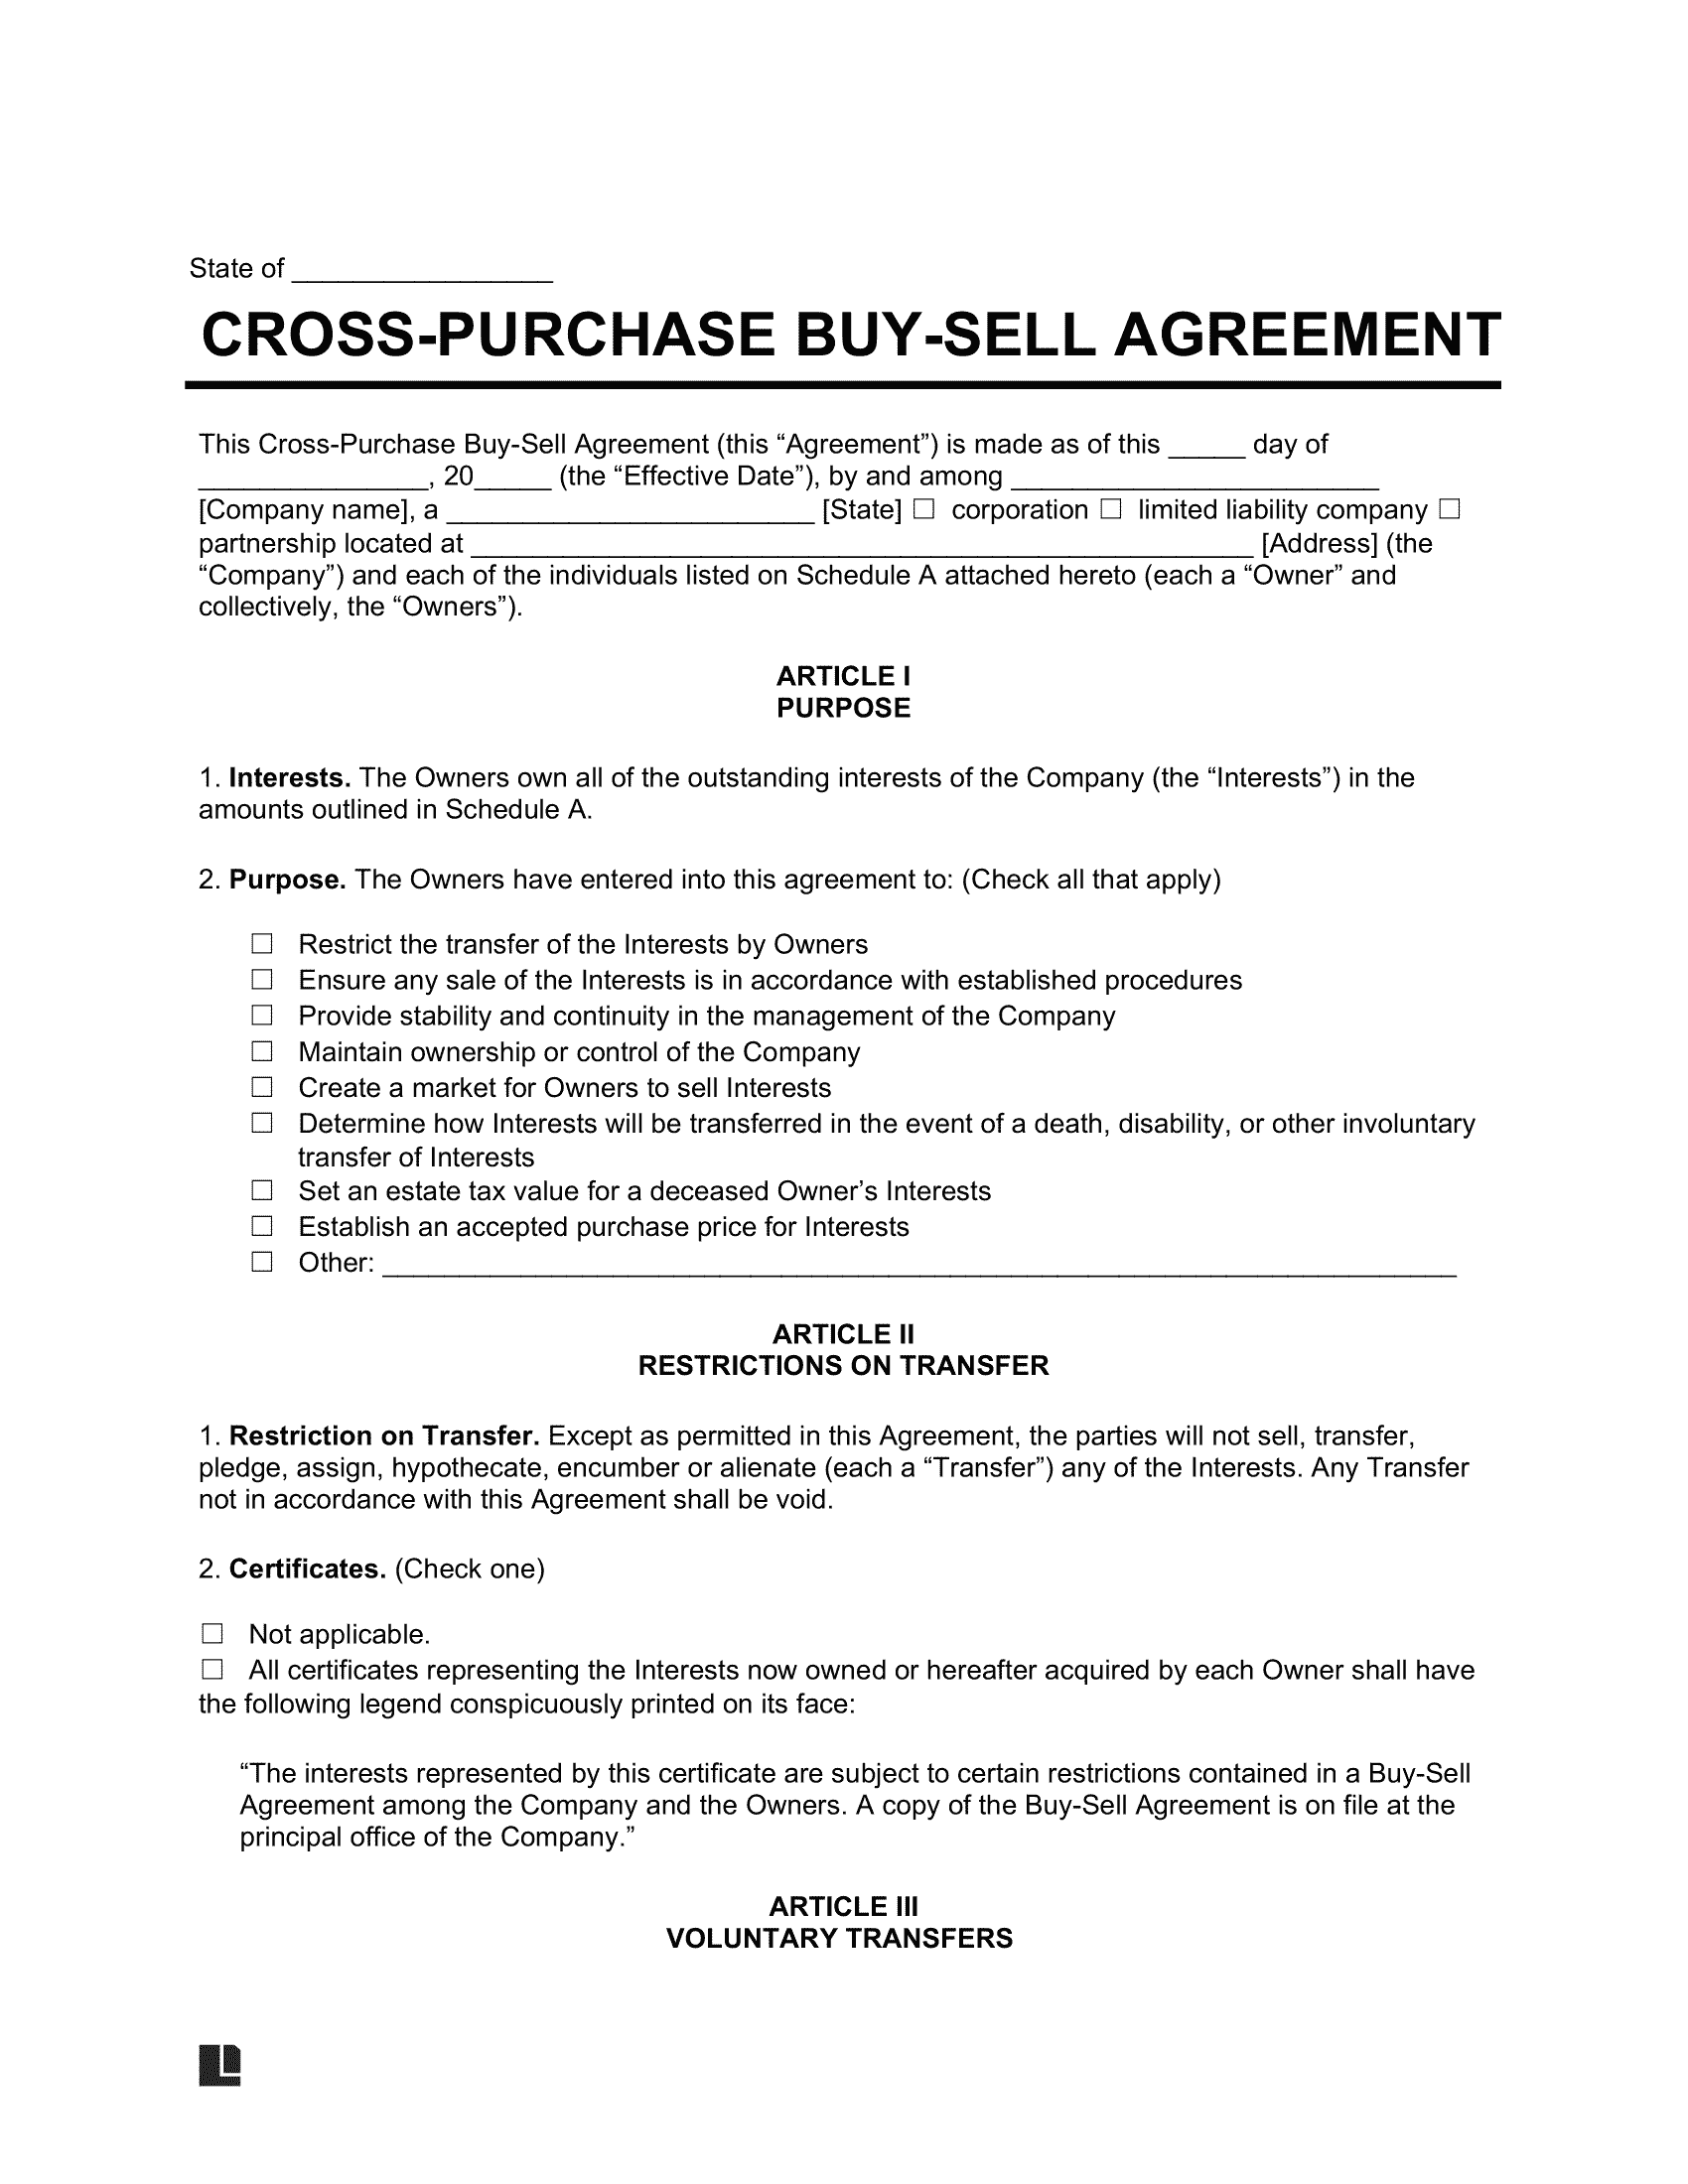 Cross-Purchase Buy-Sell Agreement Screenshot